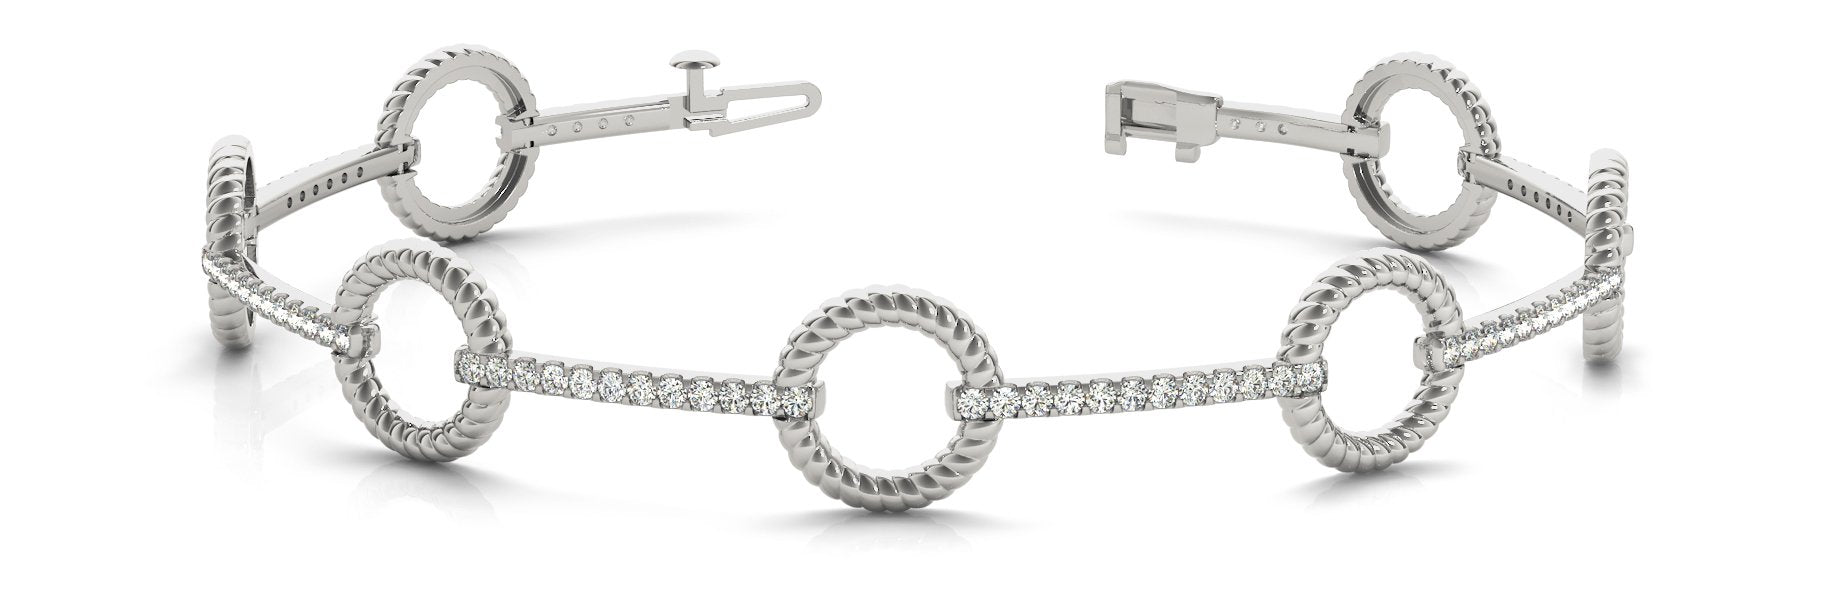 Fancy Diamond Bracelet Ladies 1.08ct tw - 14kt White Gold